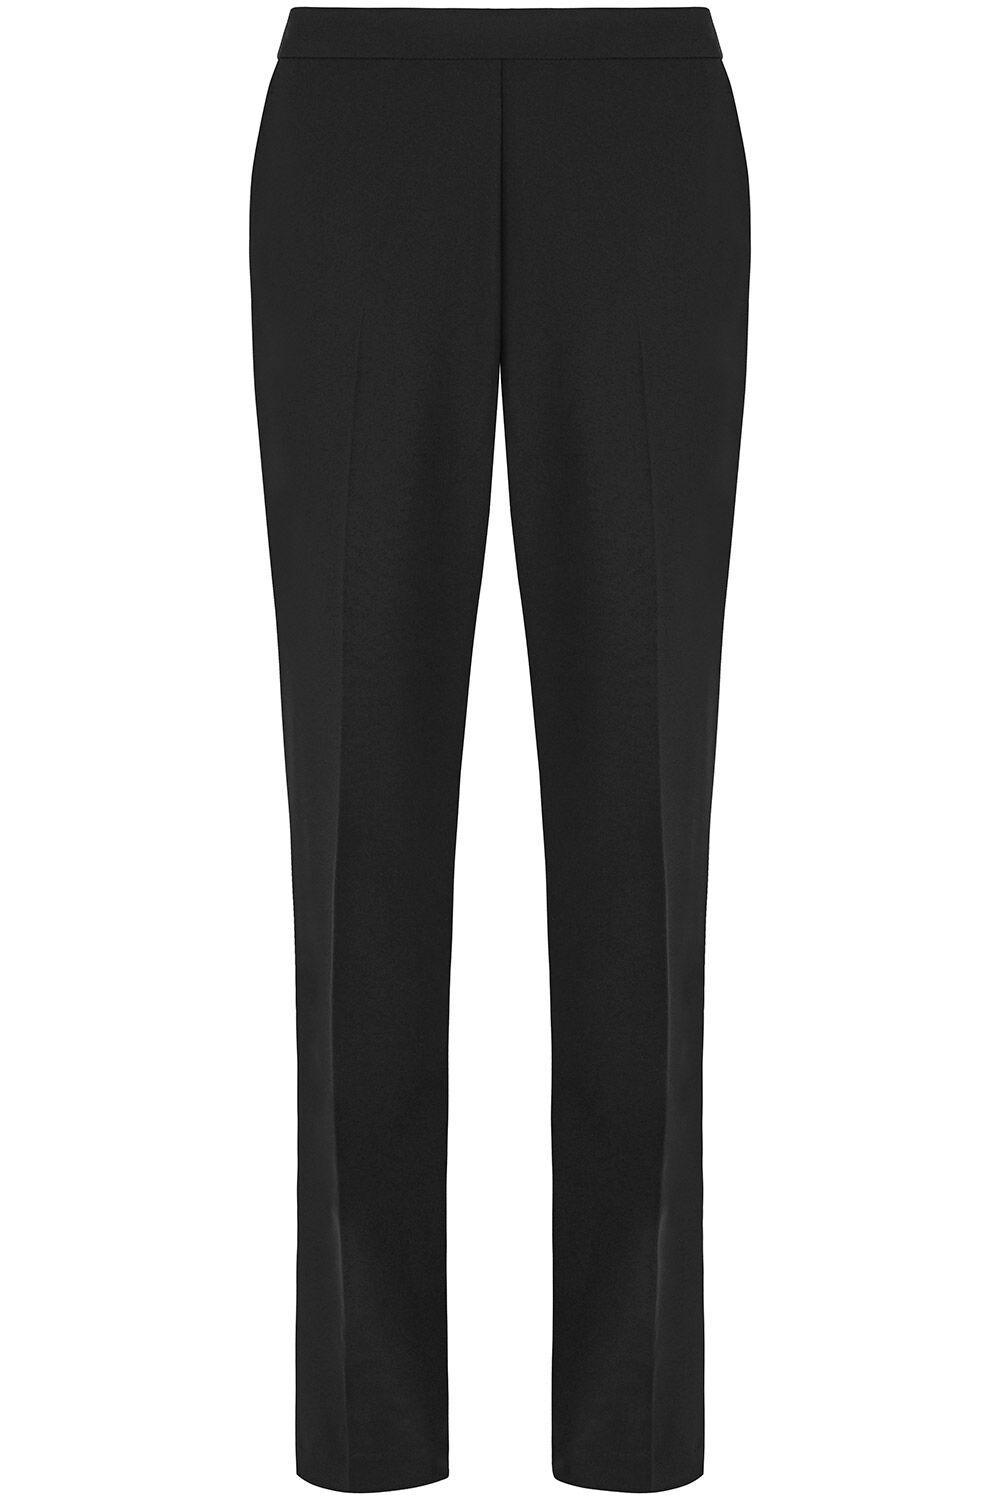 Bonmarche Plain Straight Leg Pull On Trousers - Black, Size: 14